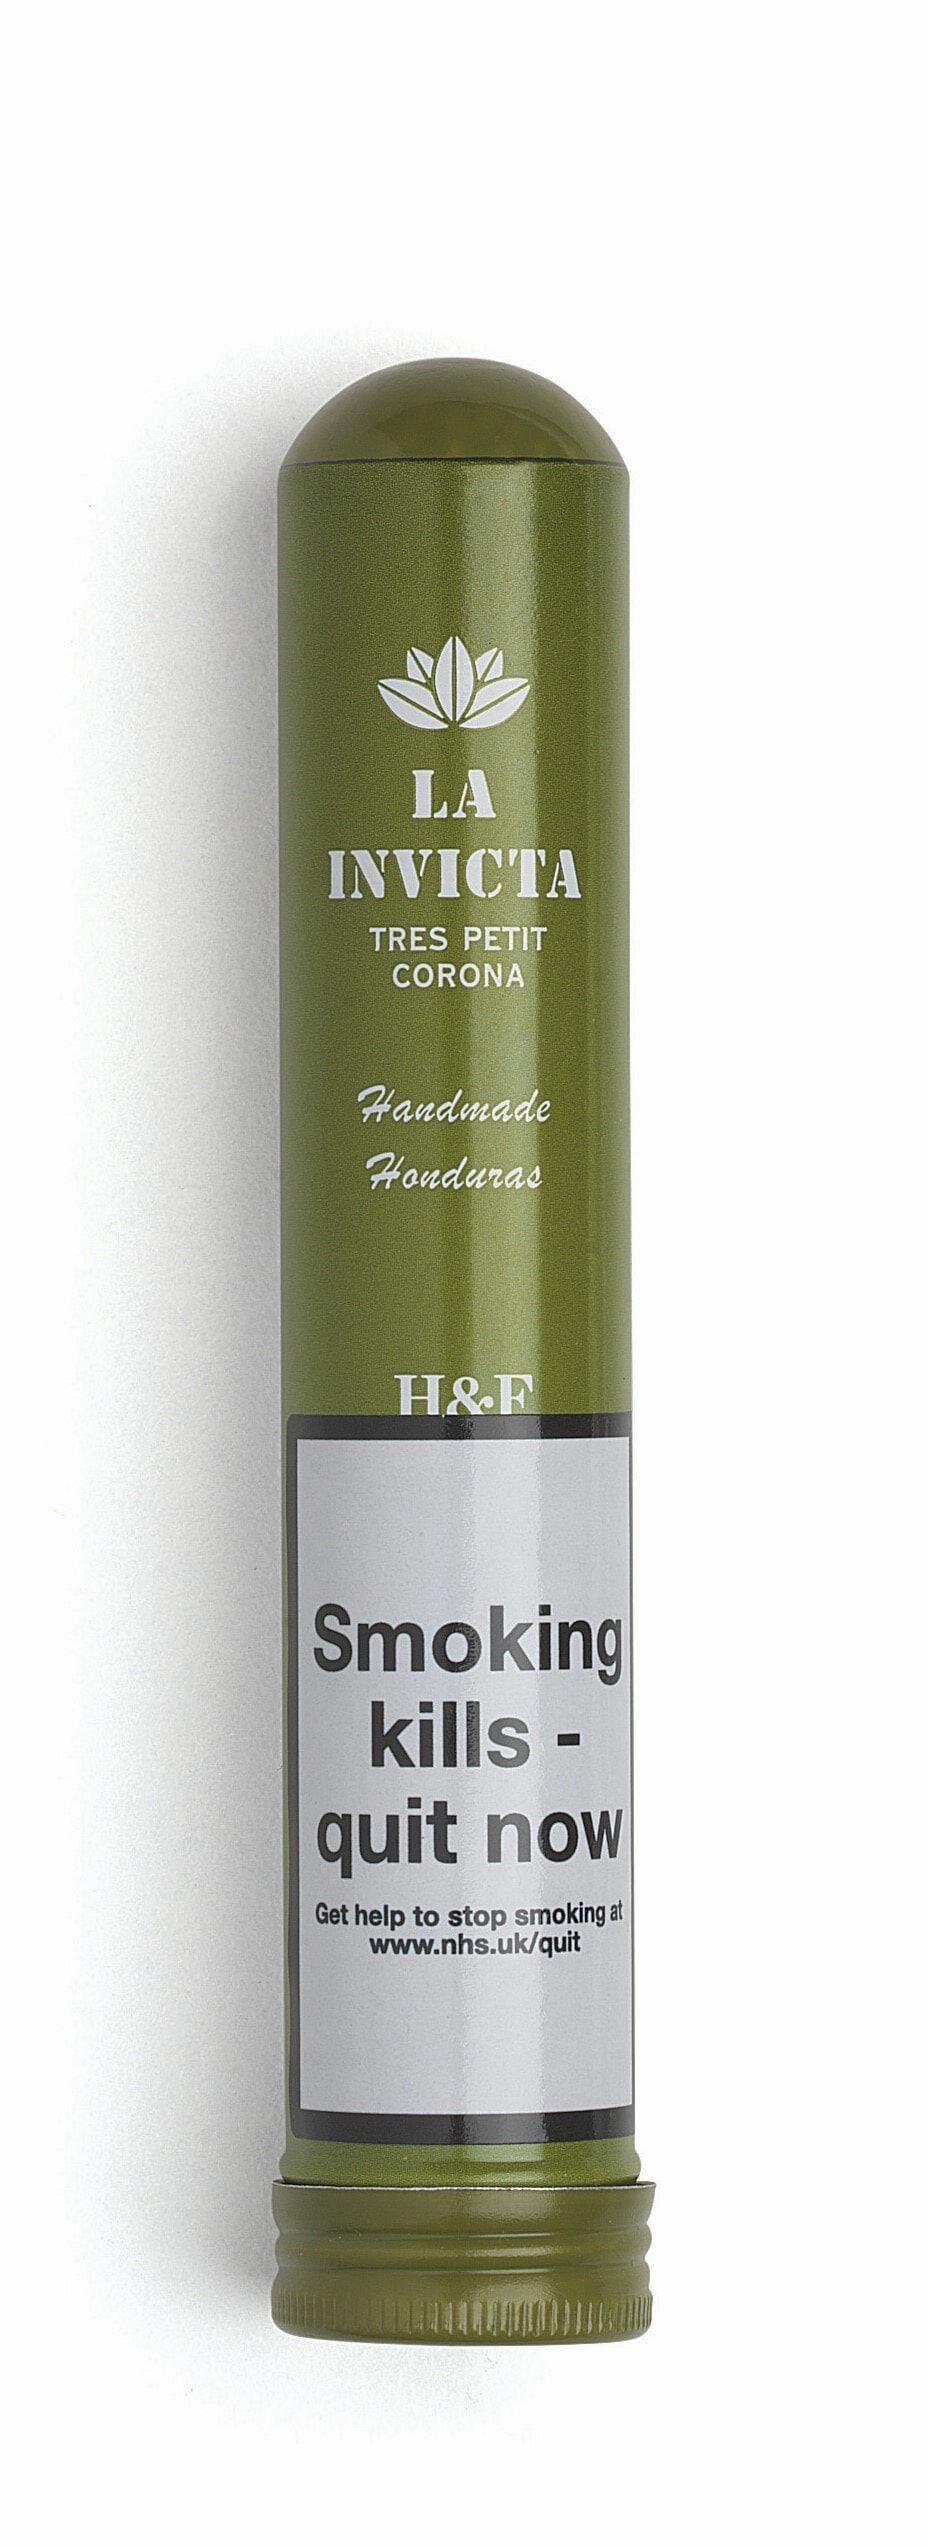 La Invicta Honduran Tres Petit Coronas Tubos single cigar